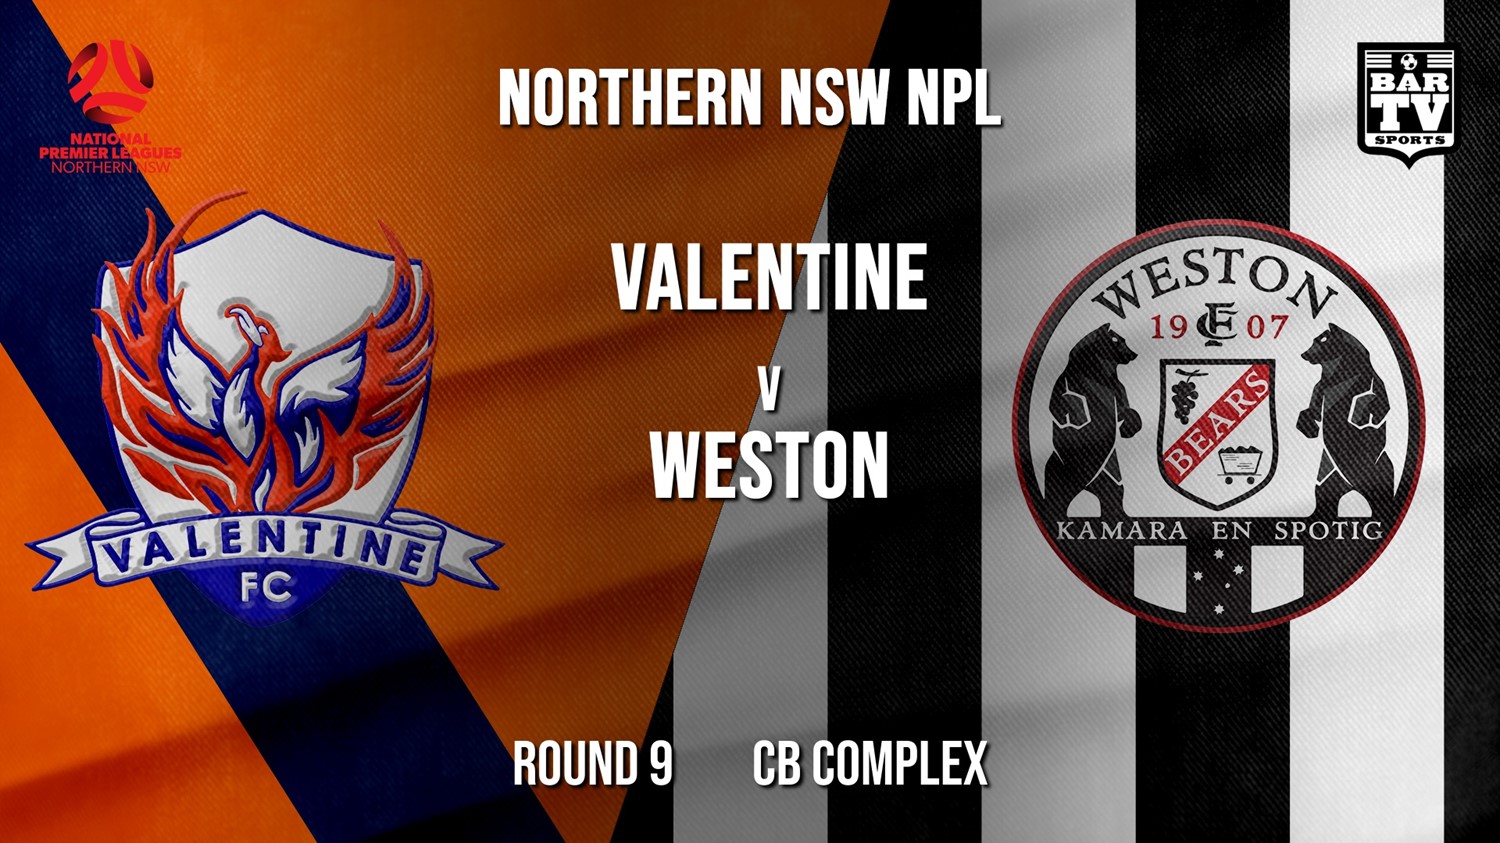 NPL - NNSW Round 9 - Valentine Phoenix FC v Weston Workers FC Minigame Slate Image